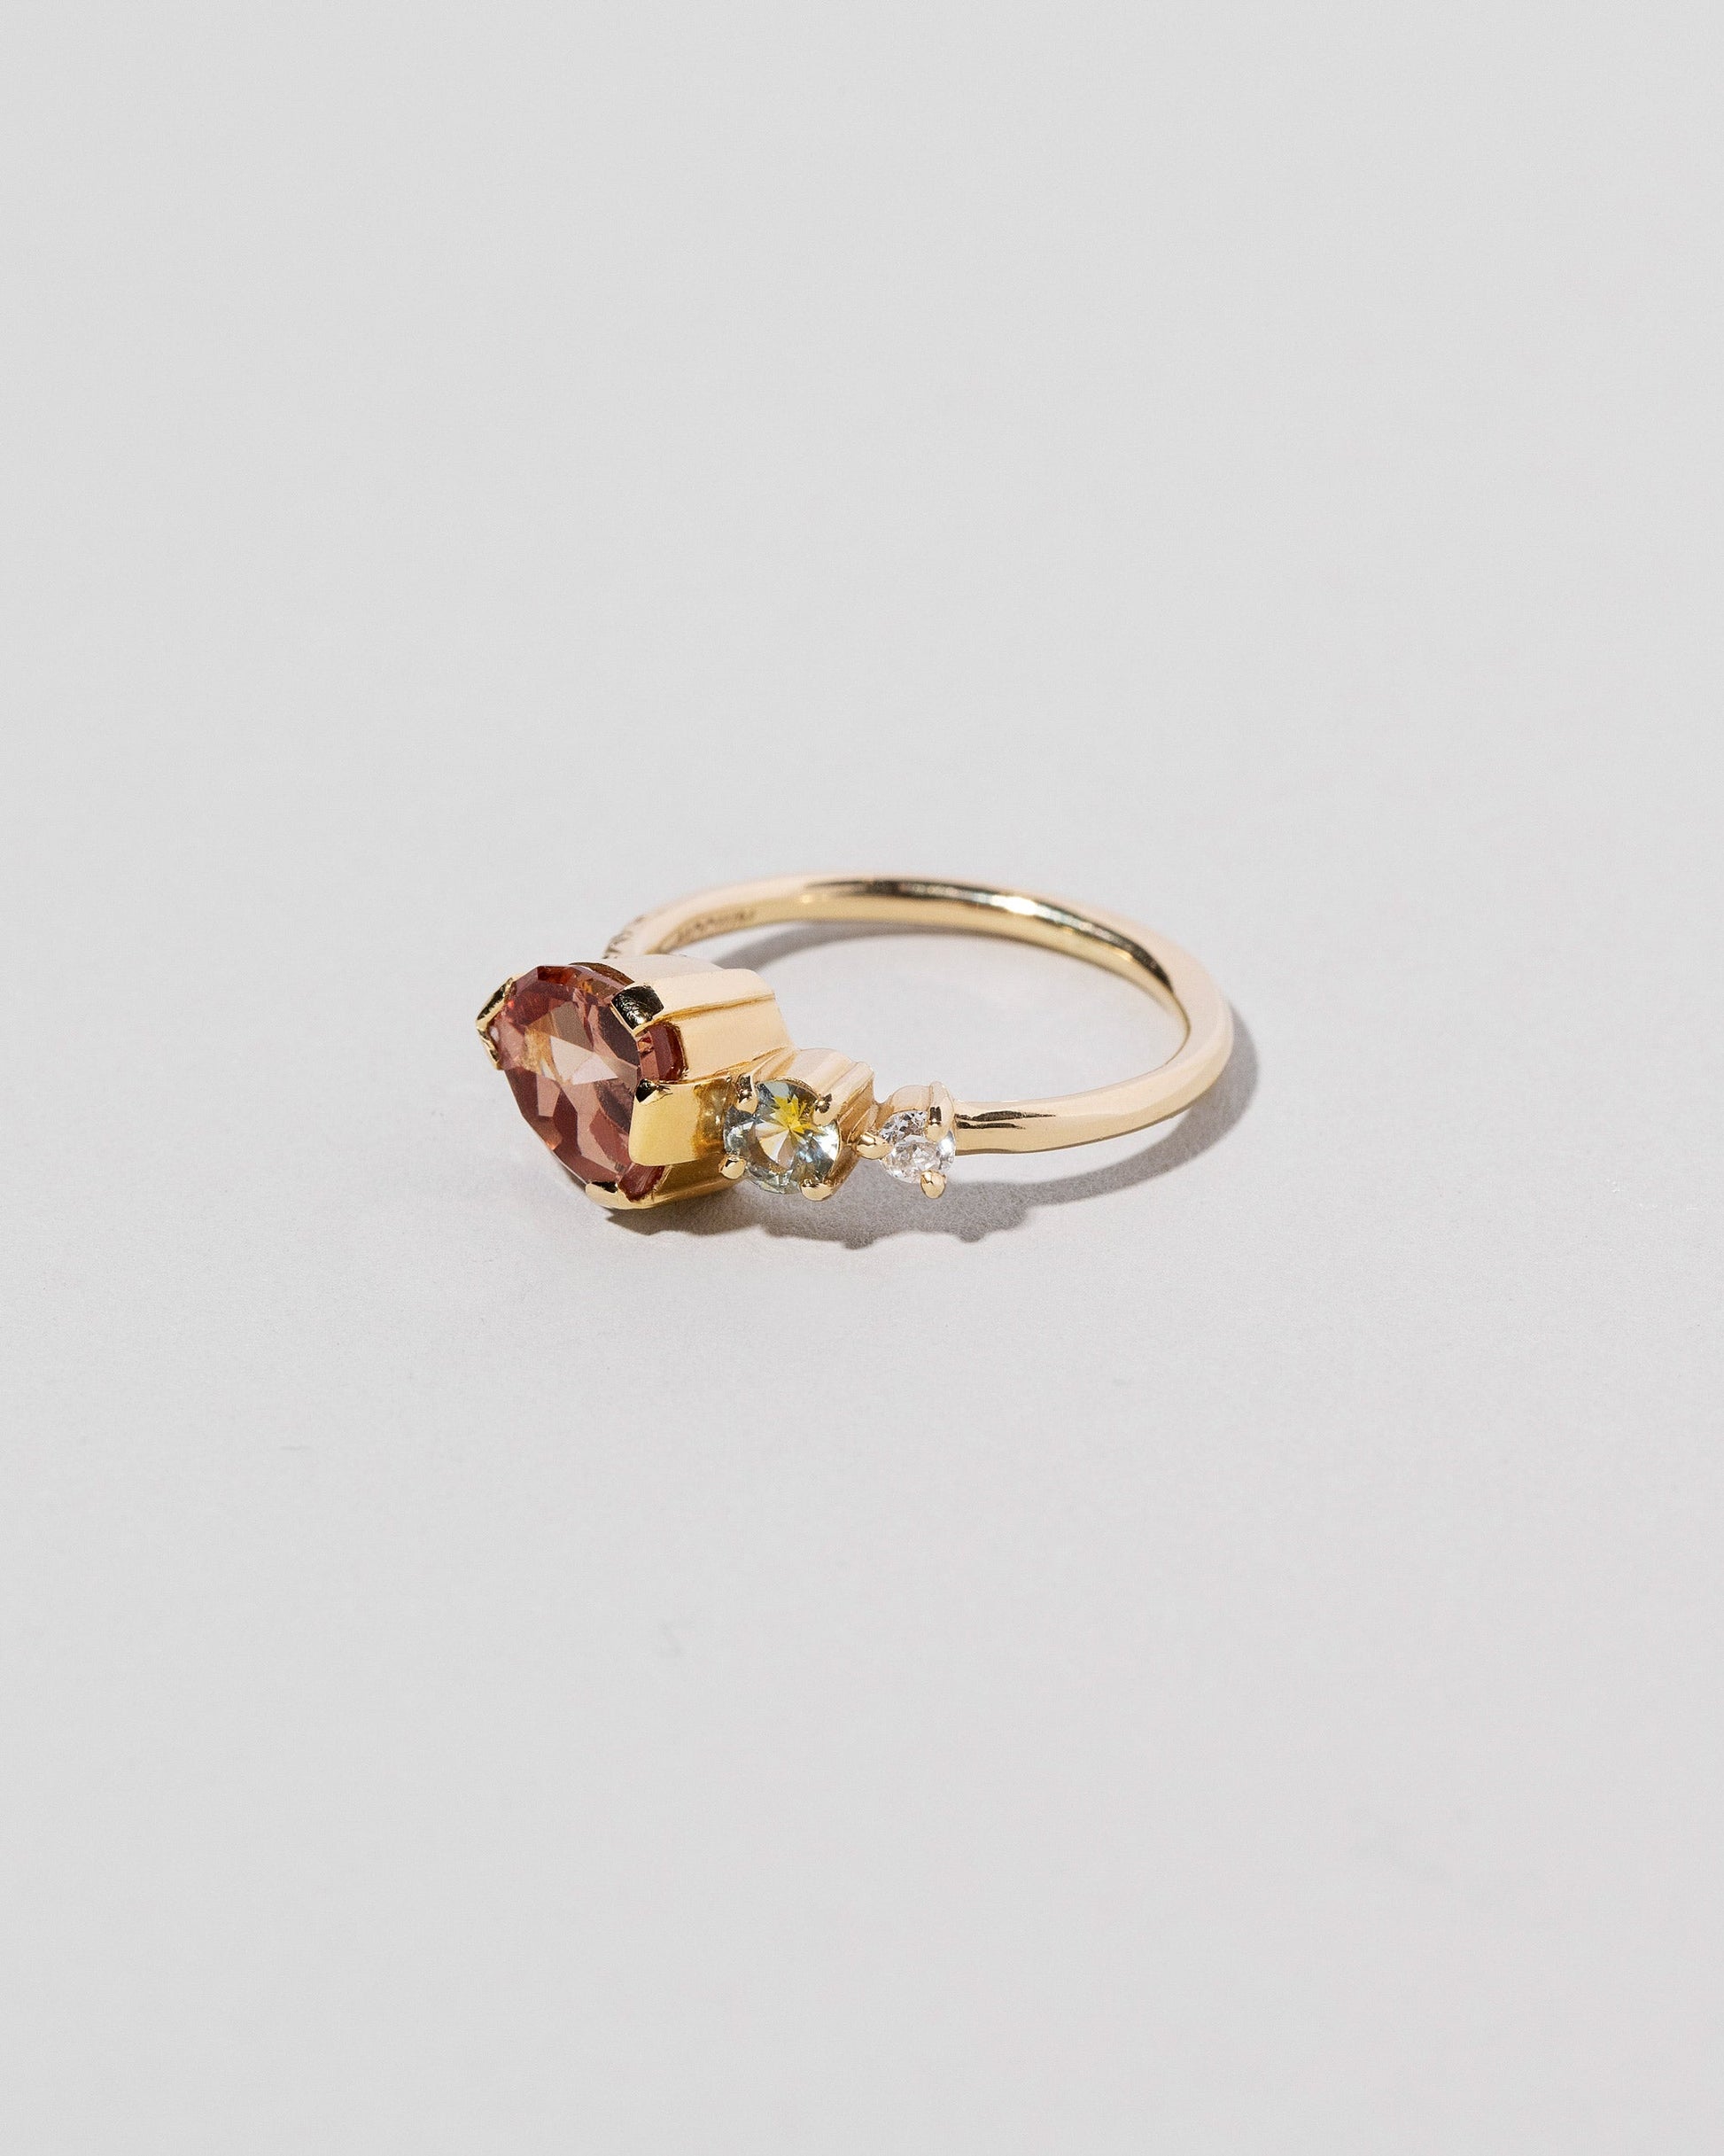  Garnet & Diamond Ring on light color background.